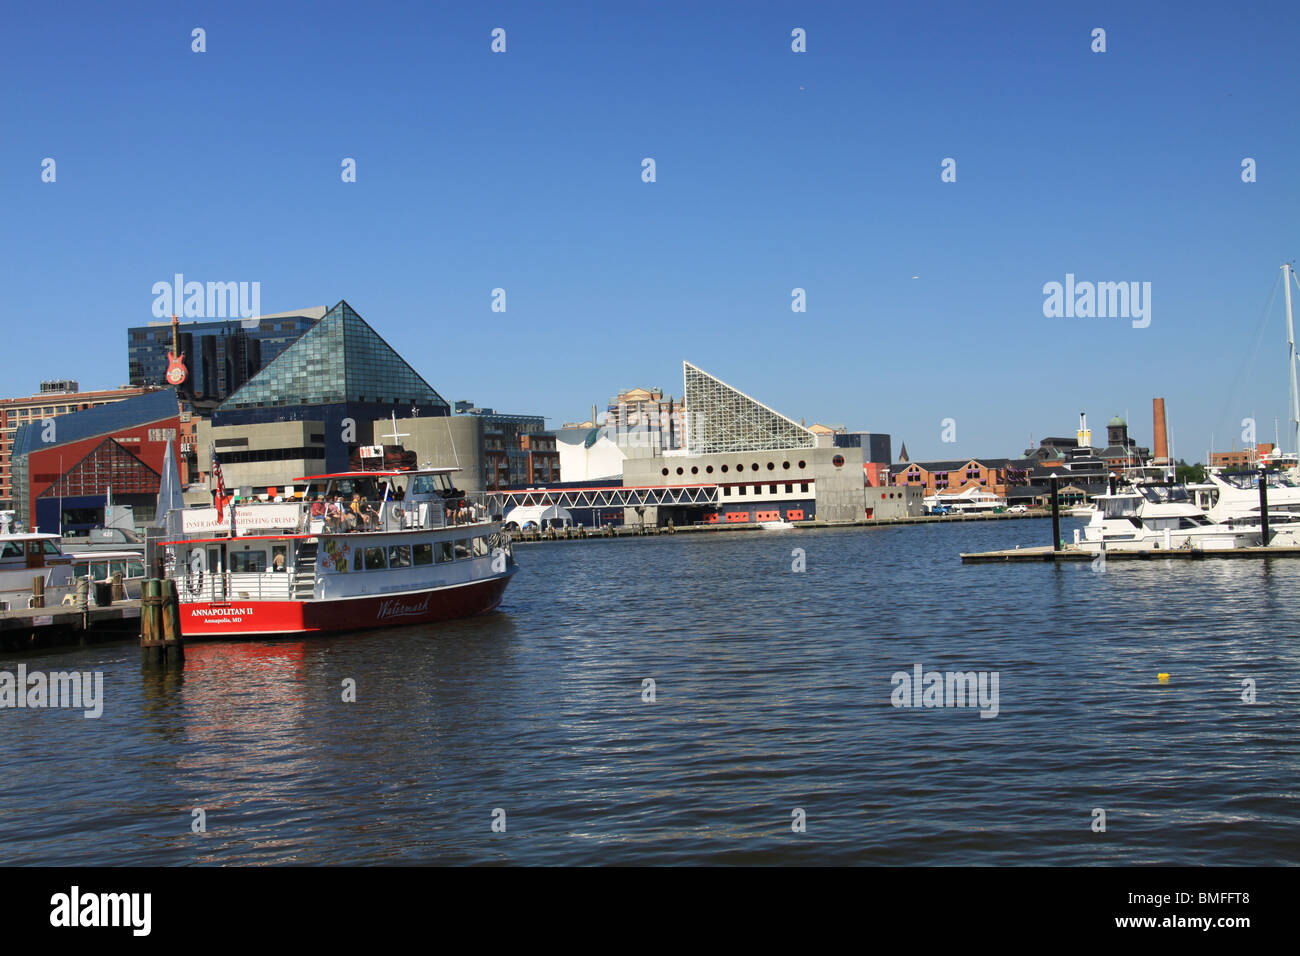 Des scènes d'Inner Harbor de Baltimore, Maryland Banque D'Images